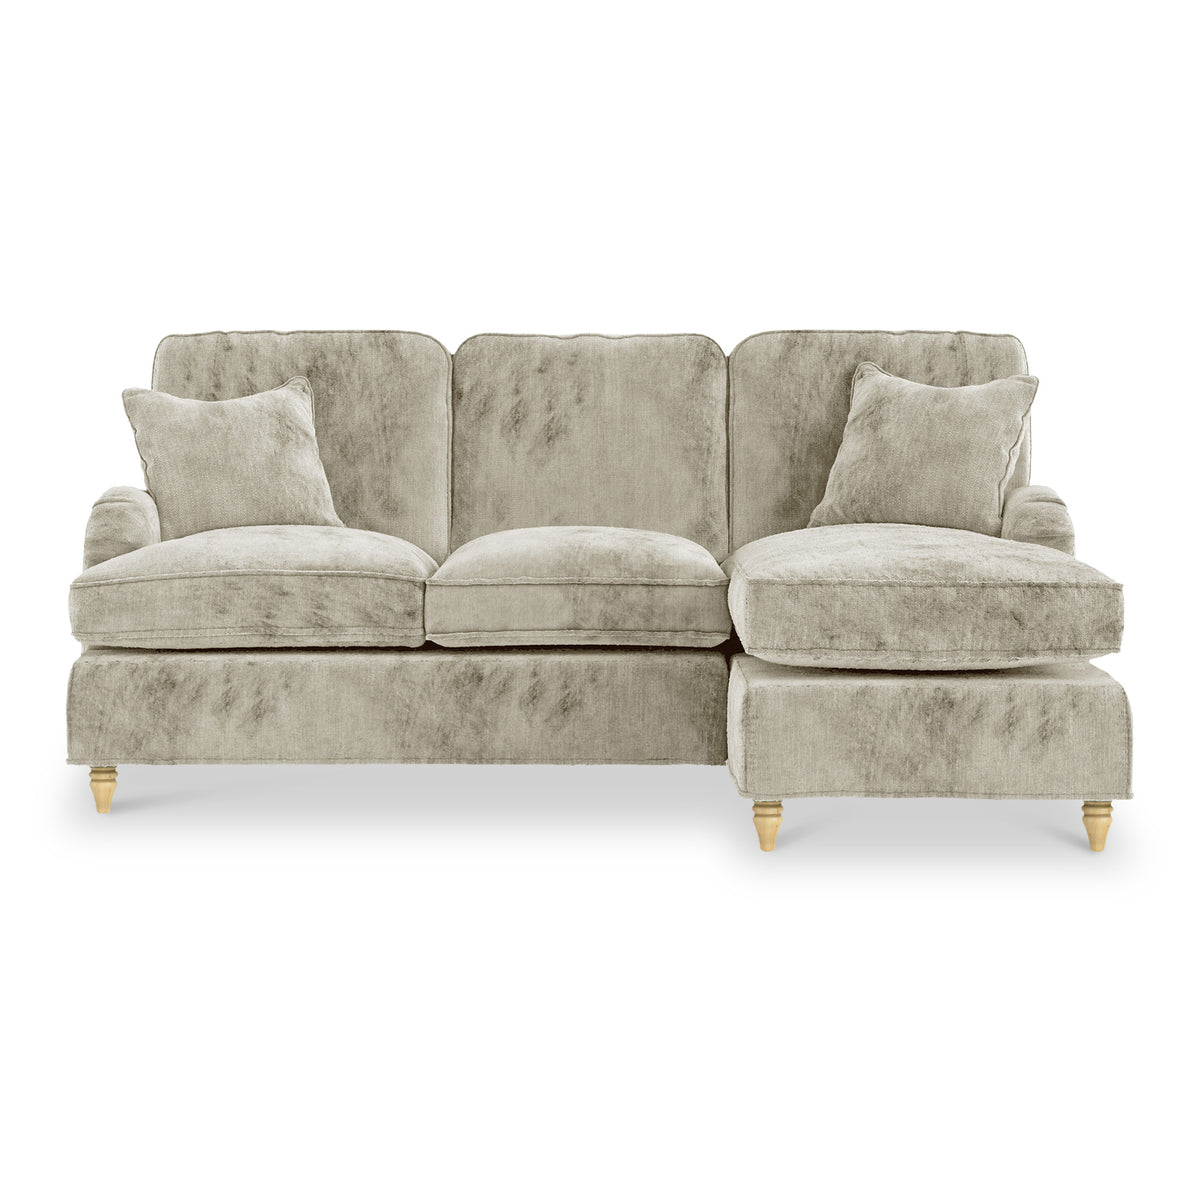 Arthur Mink RH Chaise Sofa from Roseland Furniture